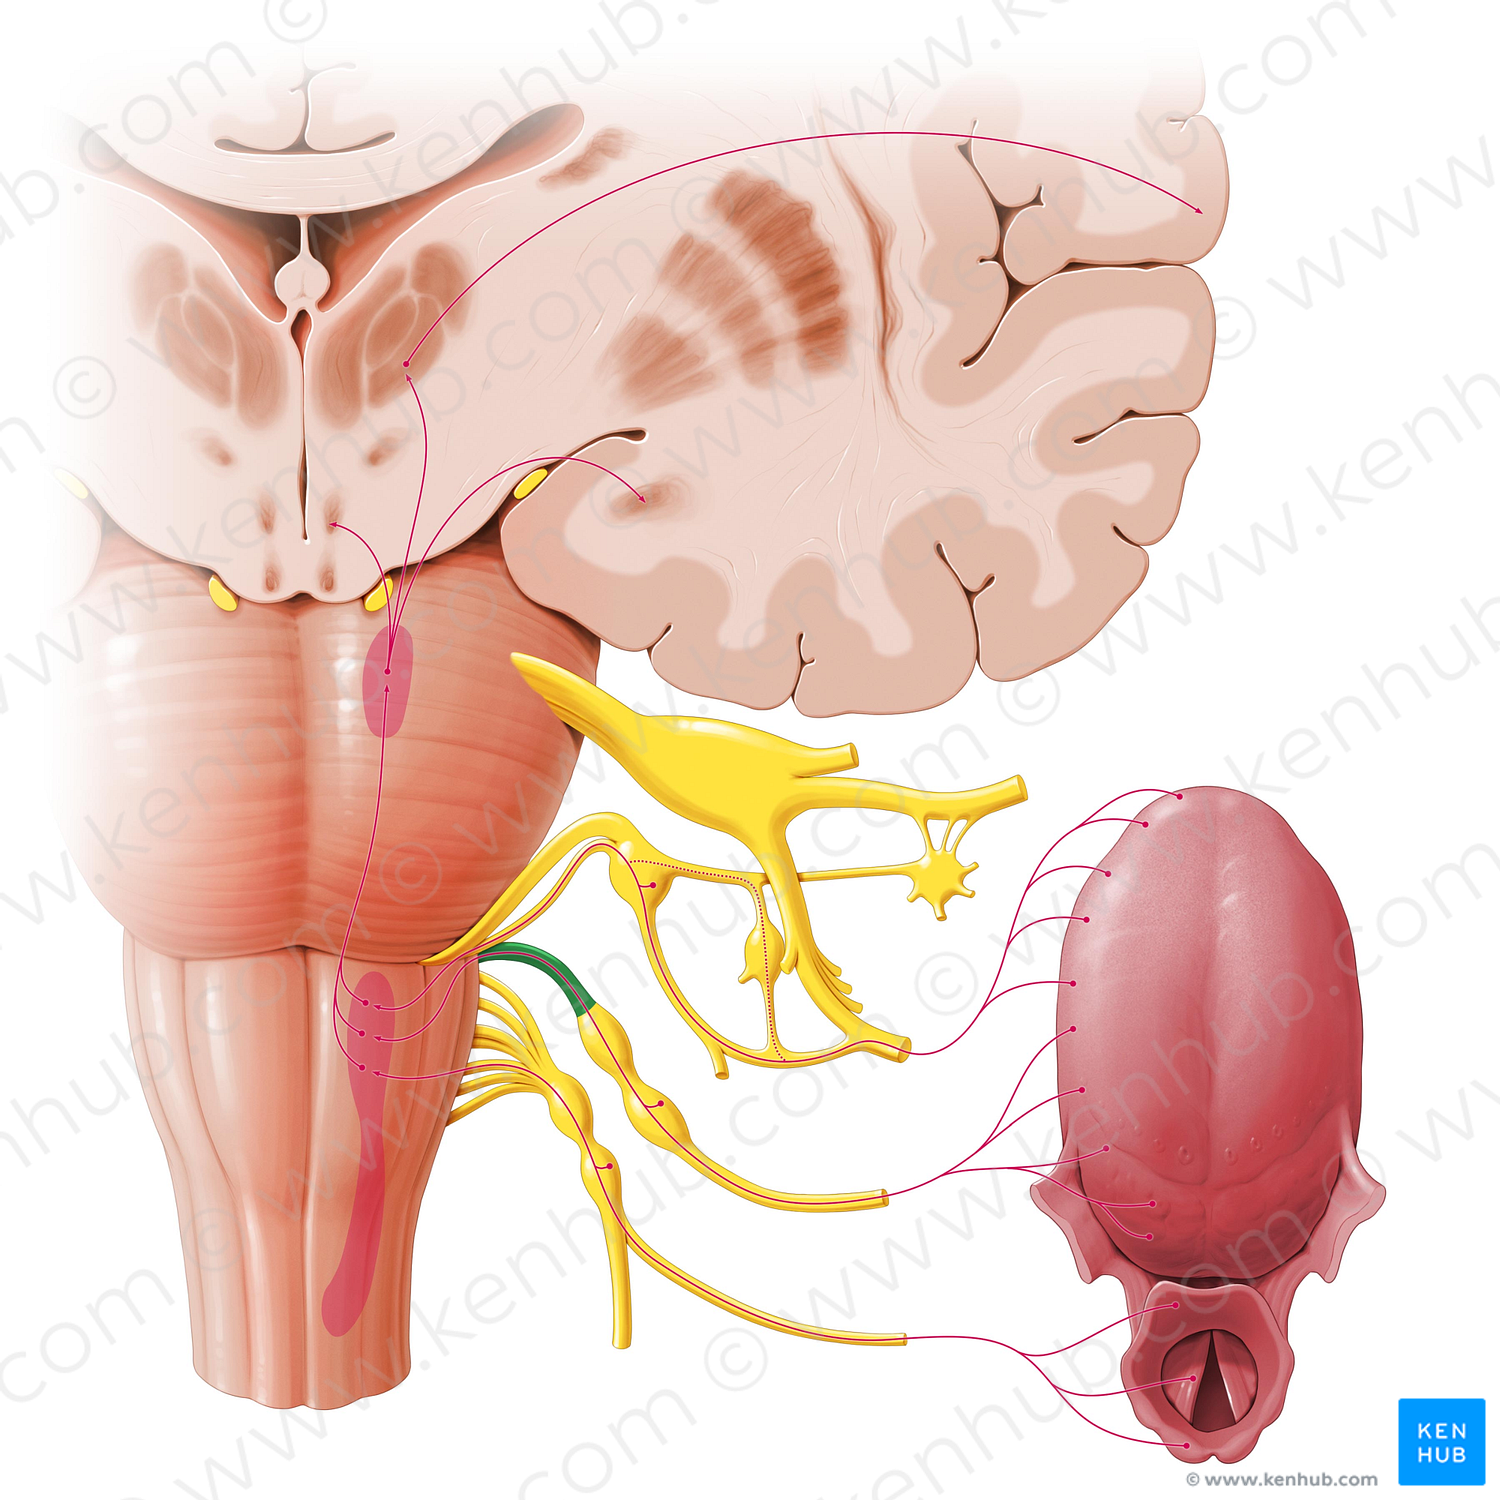 Glossopharyngeal nerve (#6438)